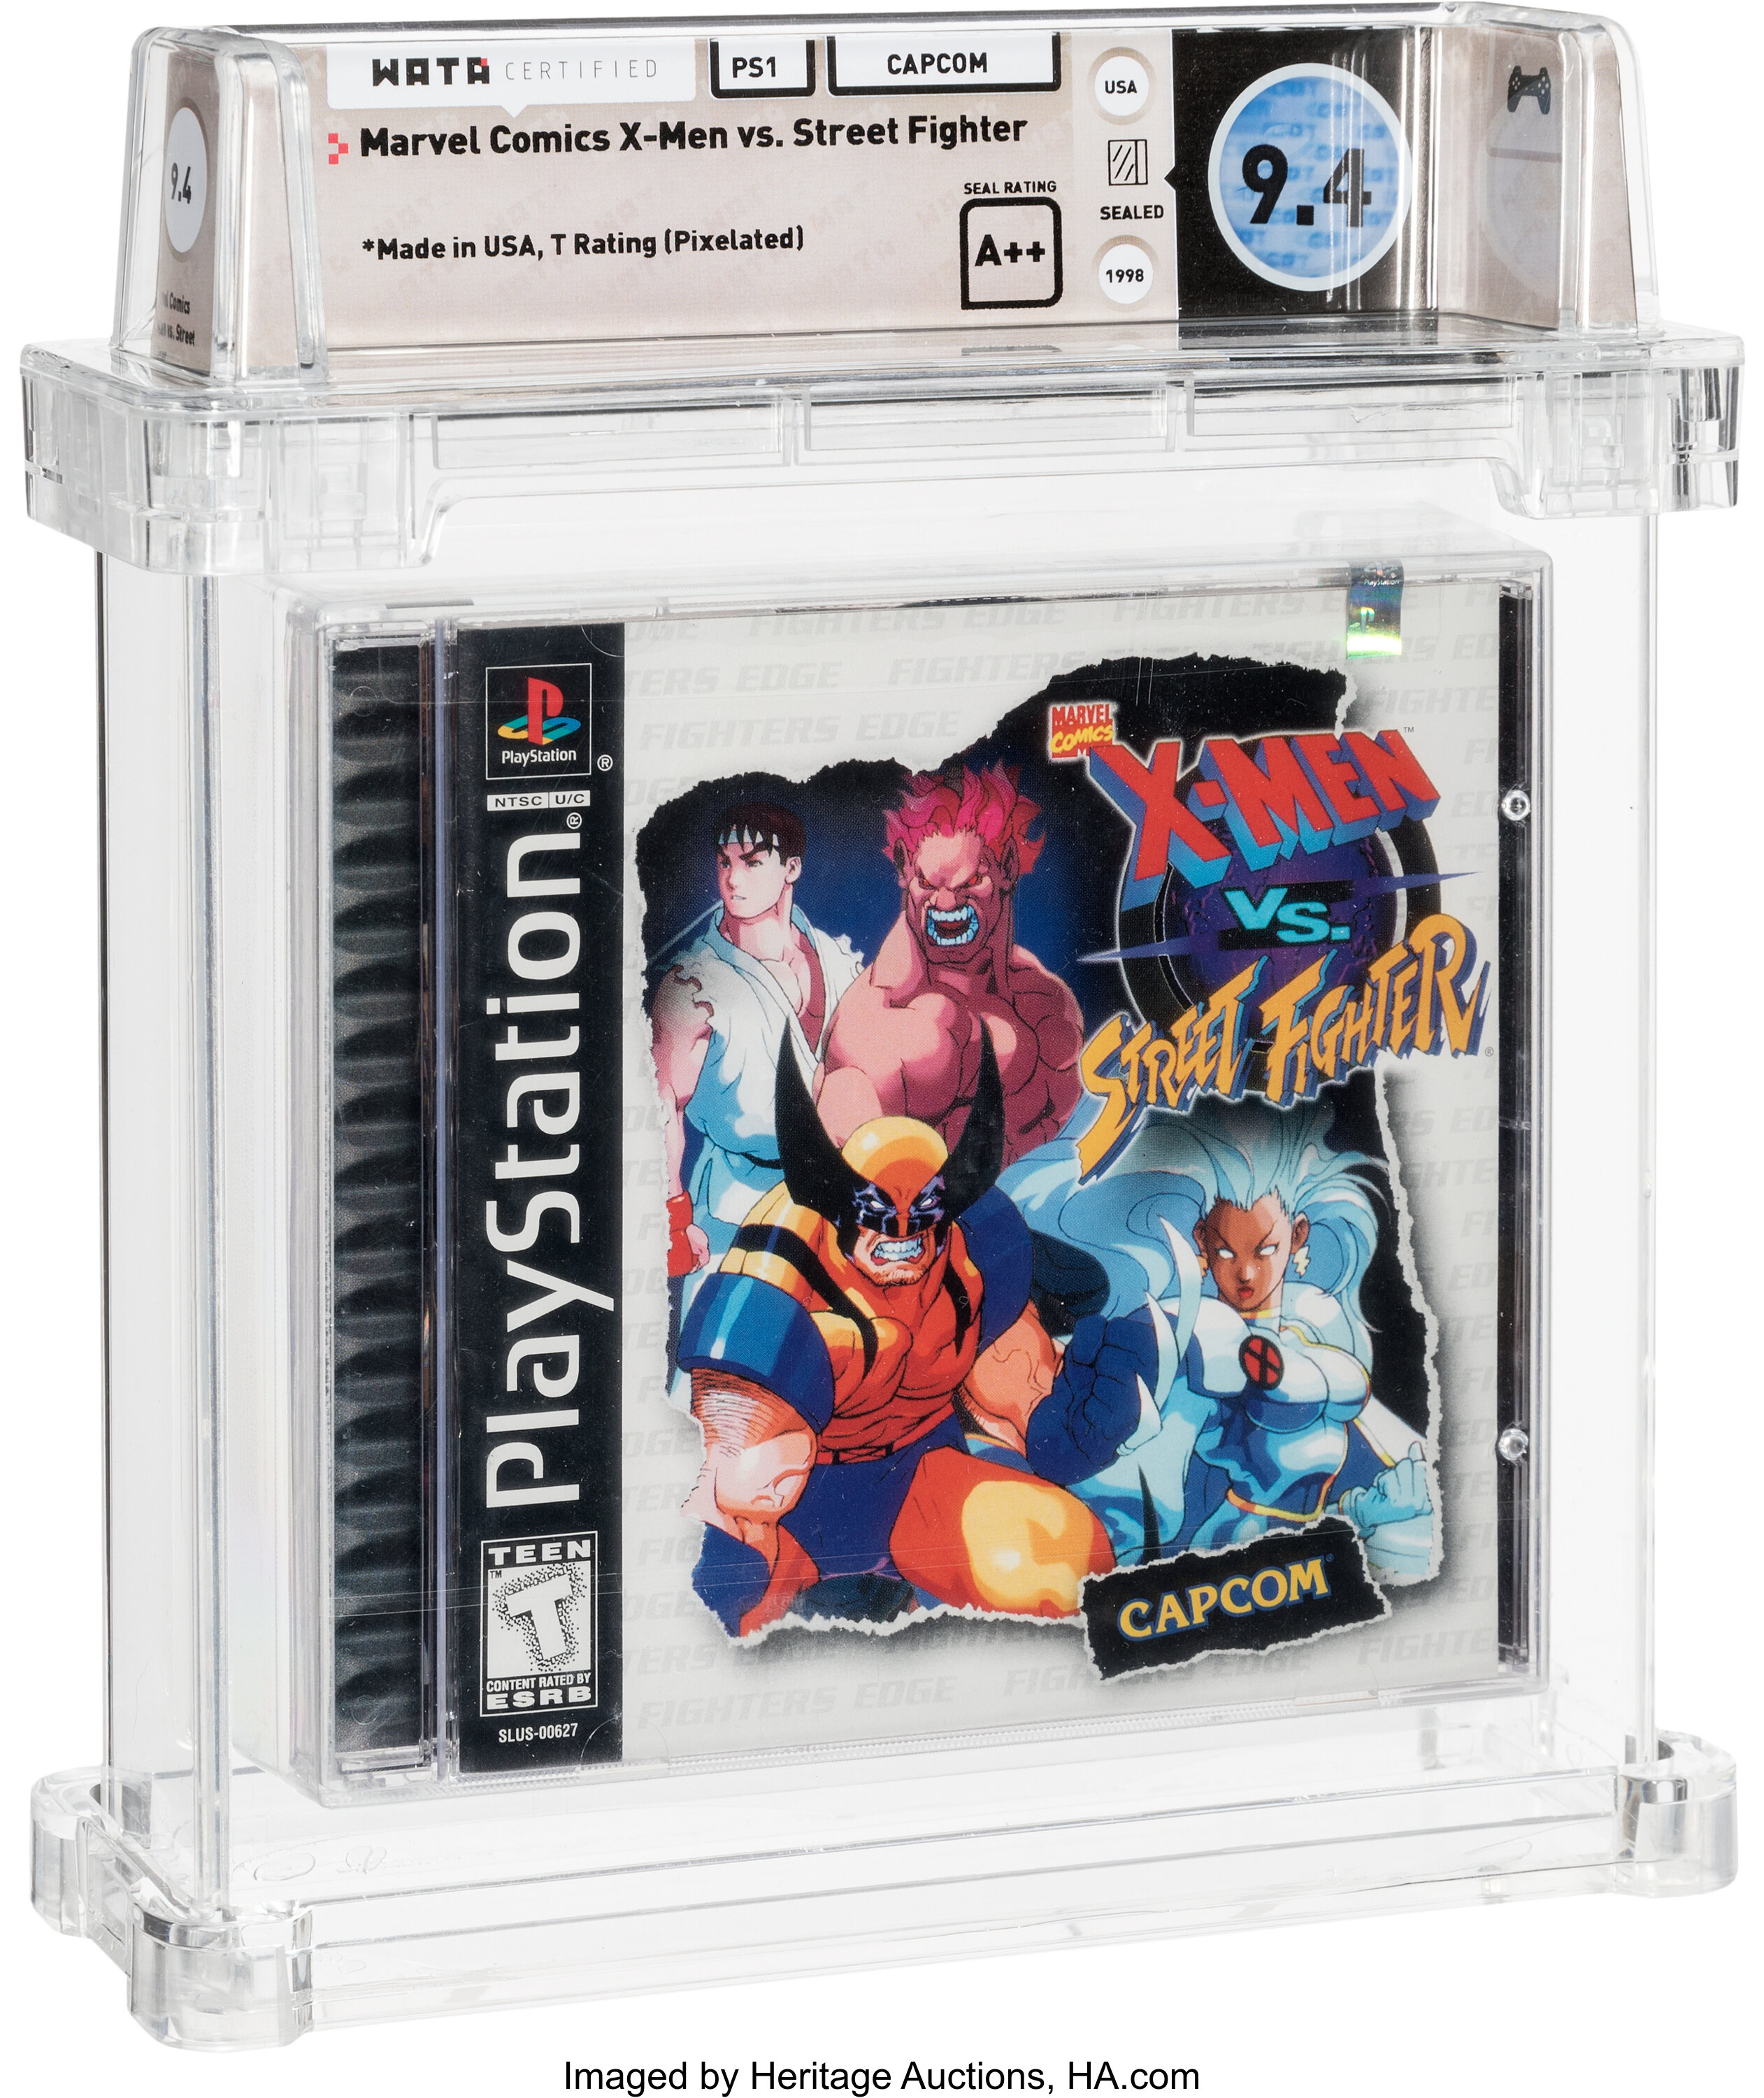 Marvel Comics X-Men vs. Street Fighter - Wata 9.4 A++ Sealed [Sony